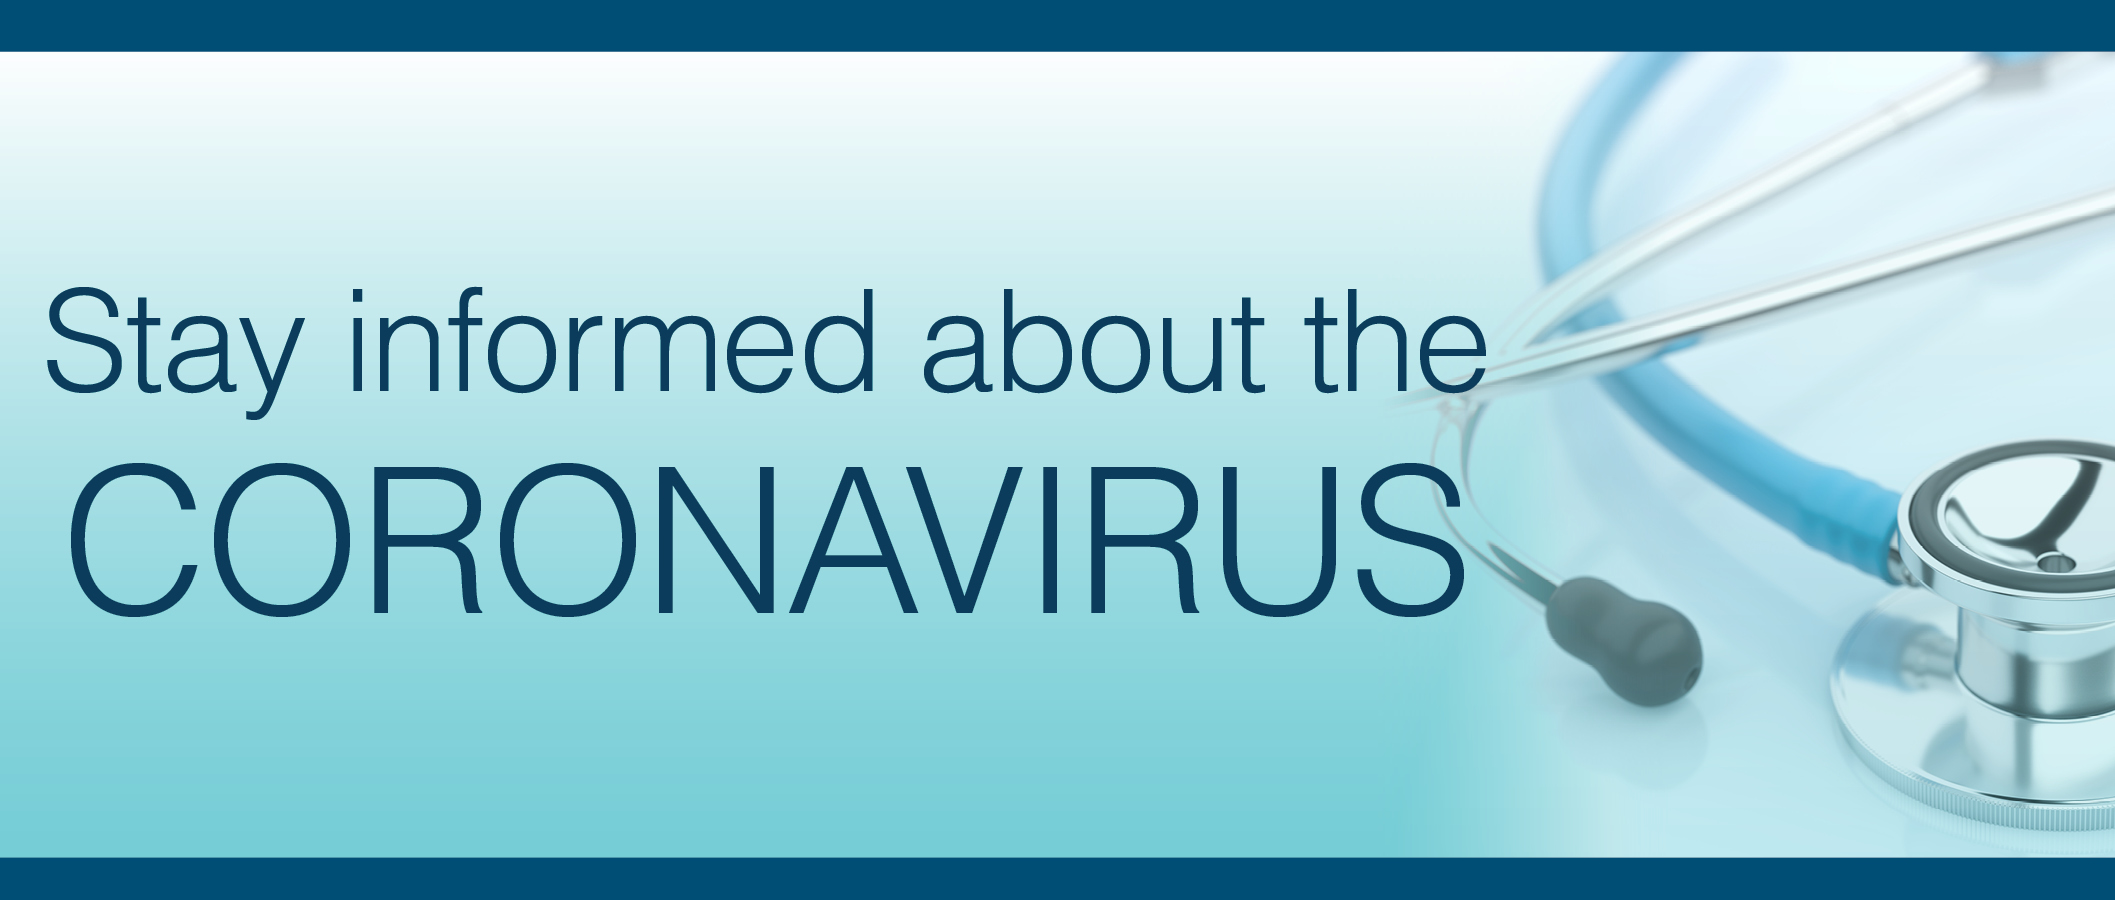 Coronavirus/Covid-19 Information